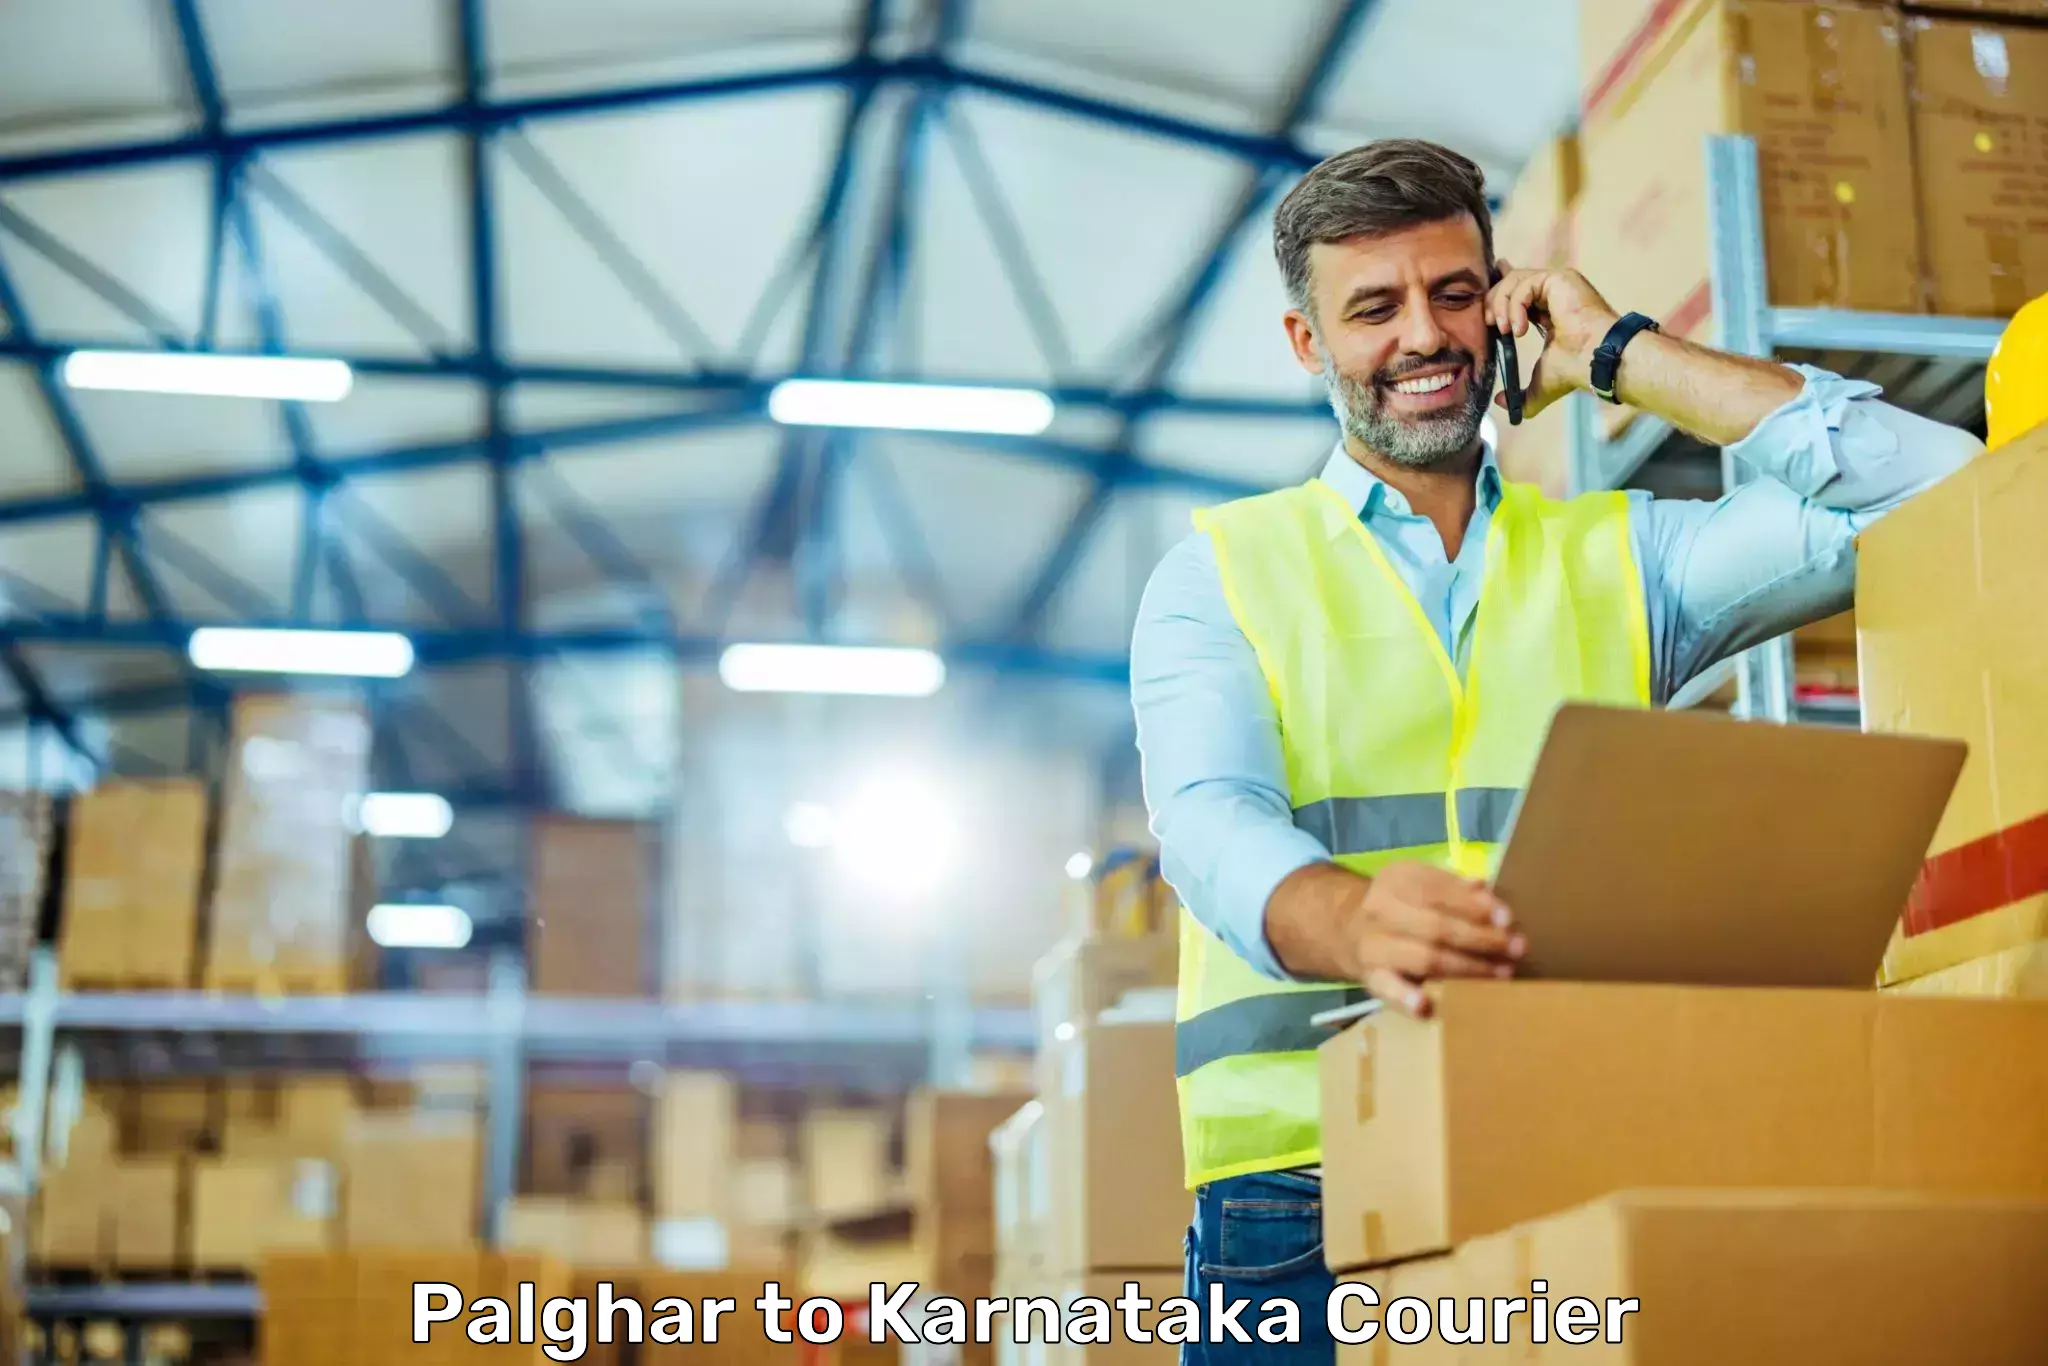 On-call courier service Palghar to Karnataka